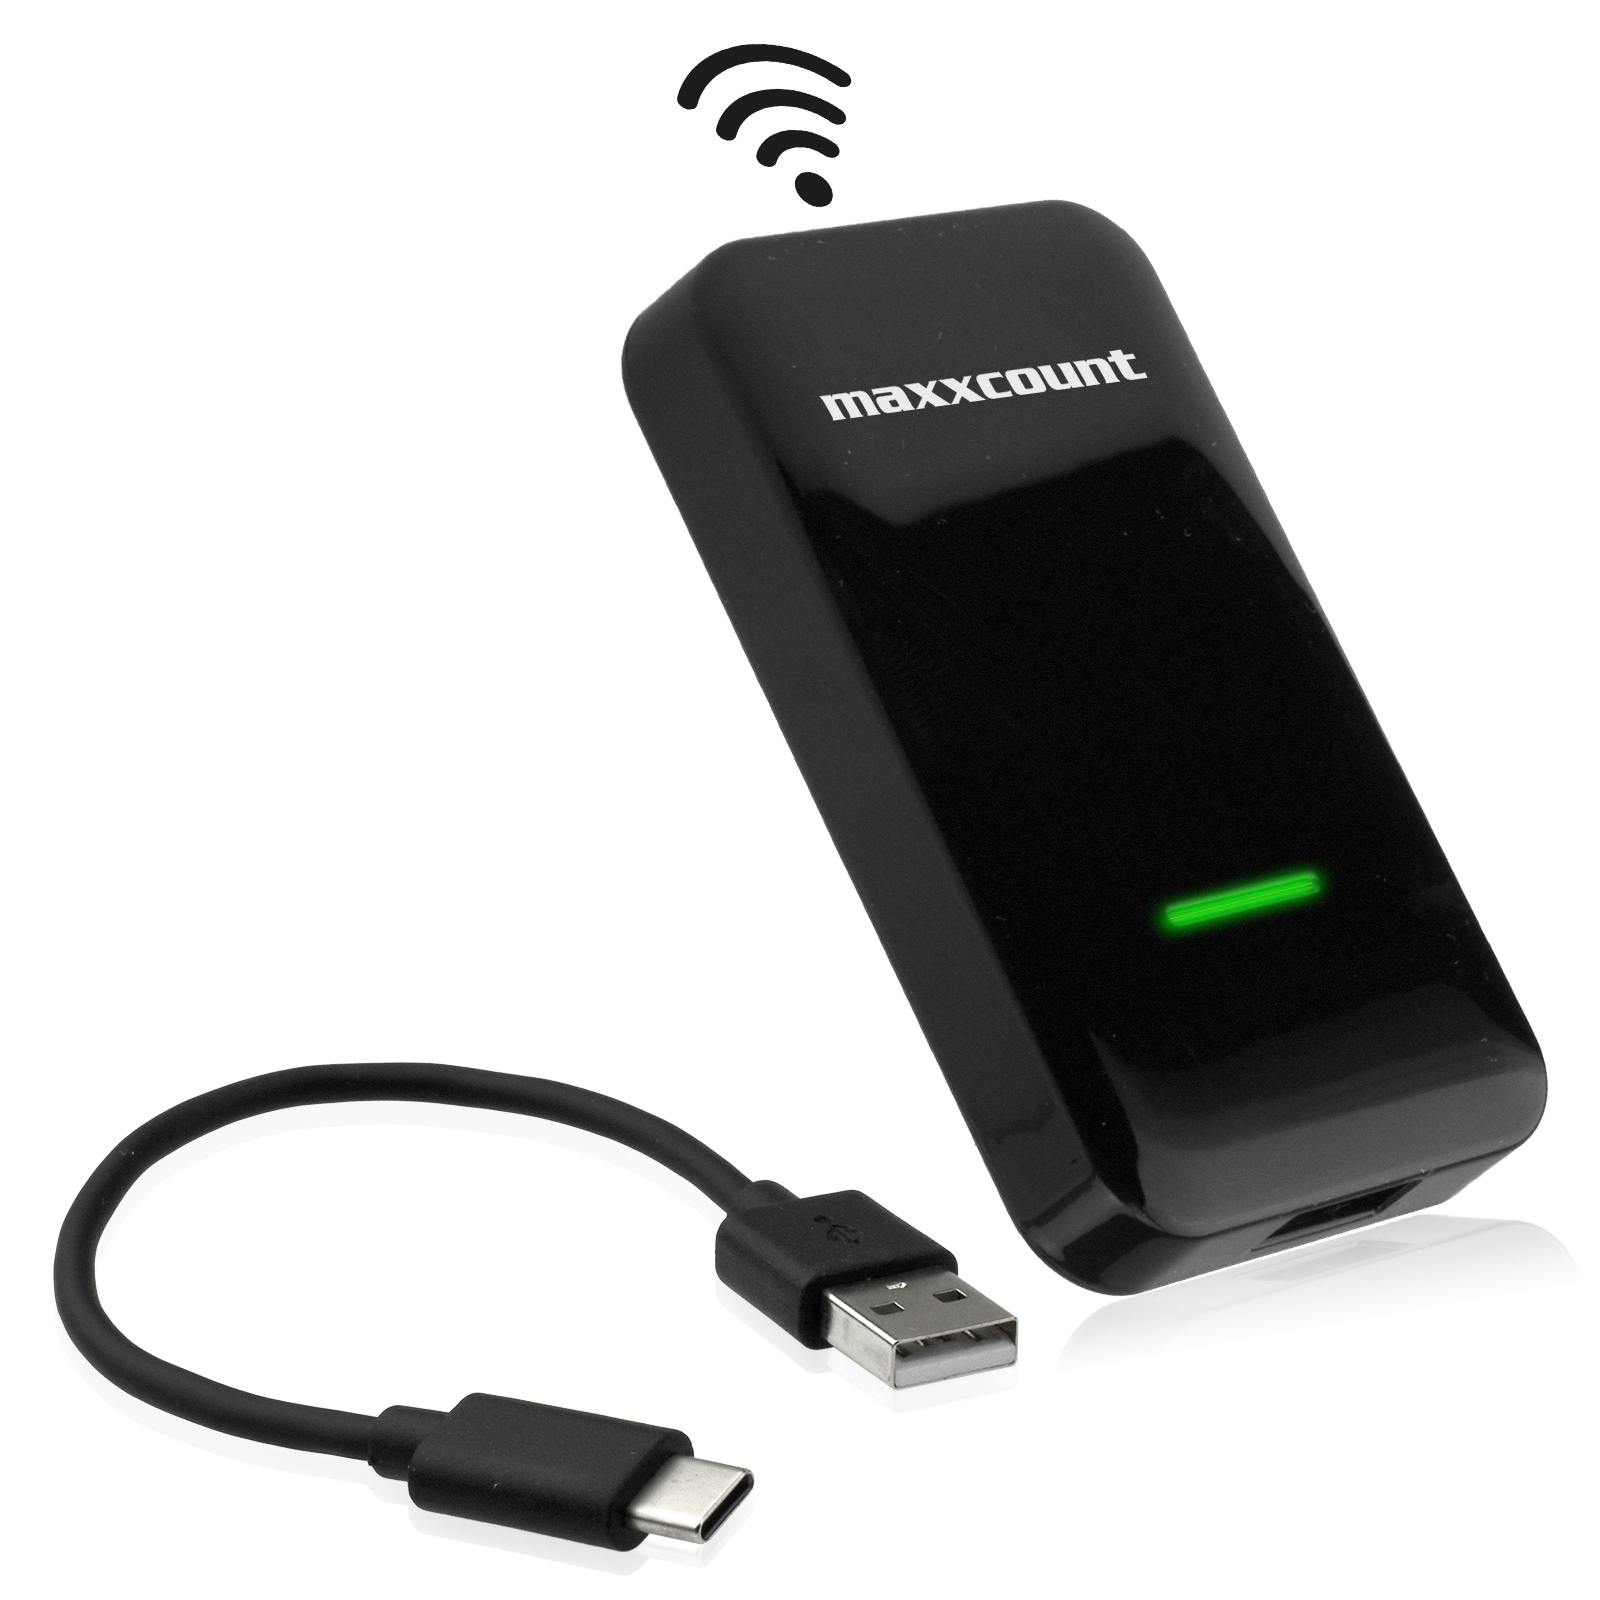 USB-Adapter Apple Carplay: kabelgebunden zu kabellos (Wired